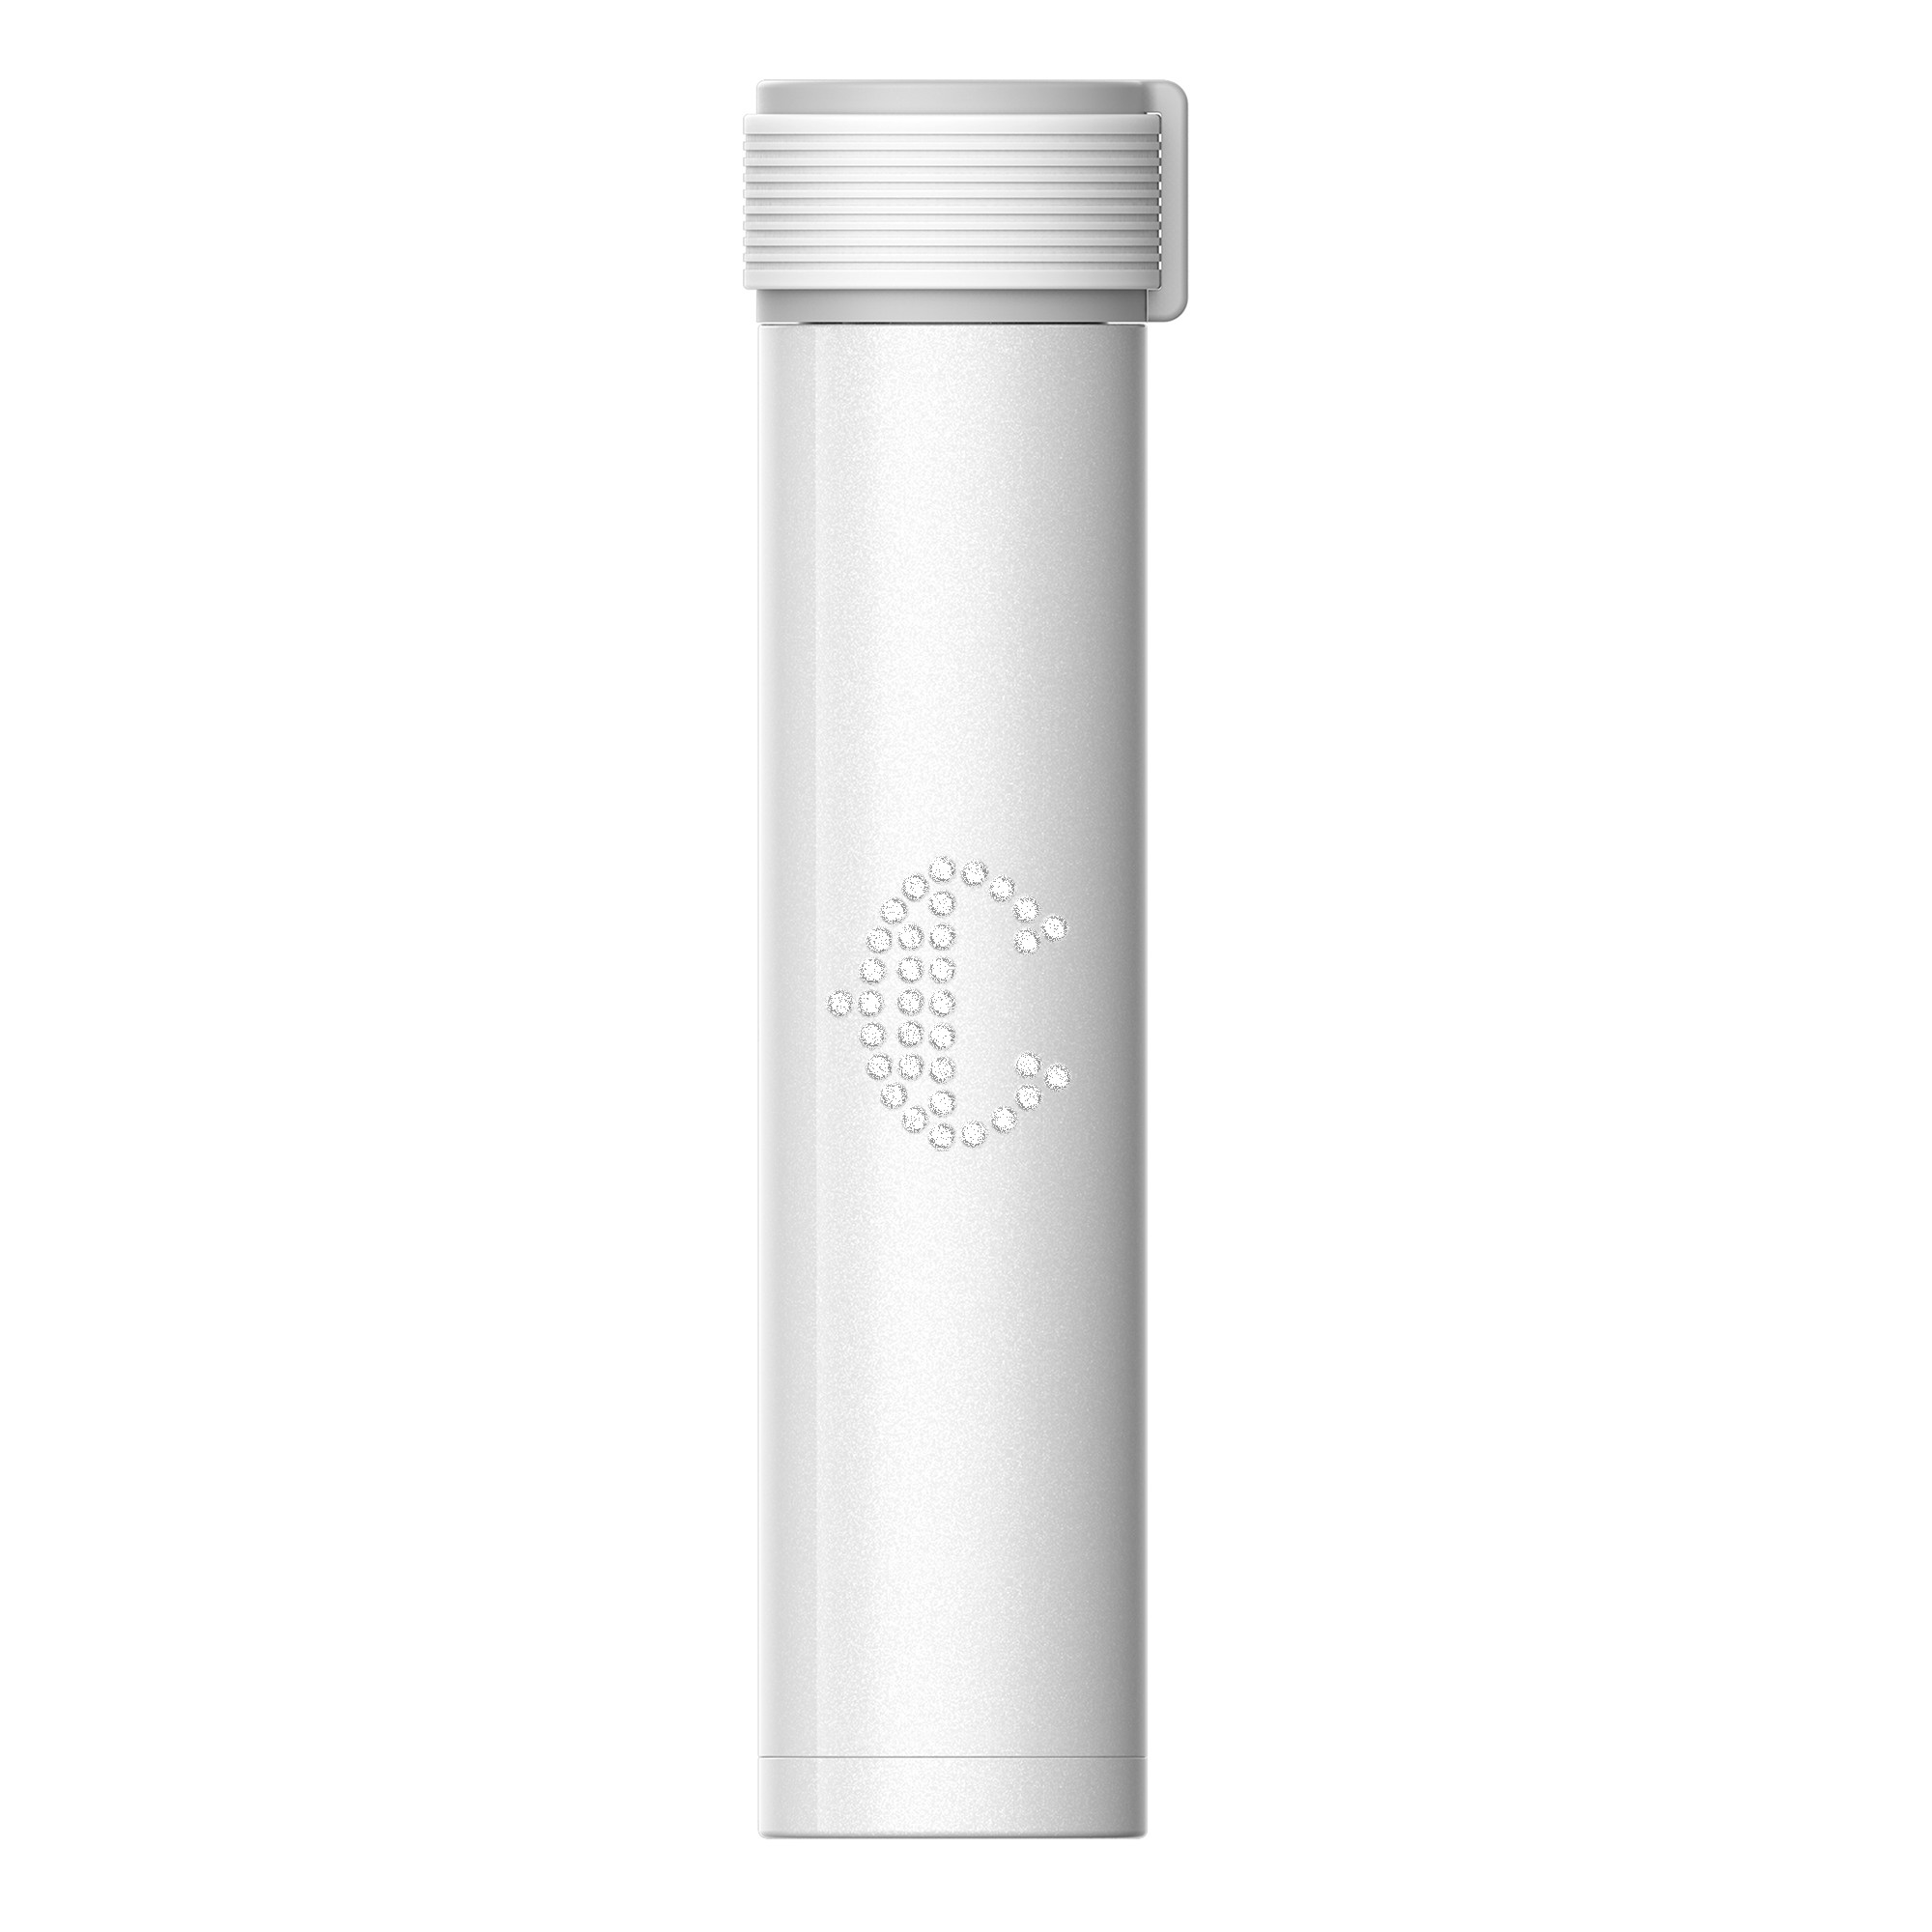 https://www.hansonellis.com/mm5/graphics/00000001/skinny-mini-double-wall-stainless-steel-water-bottle-aso-14r99.jpg